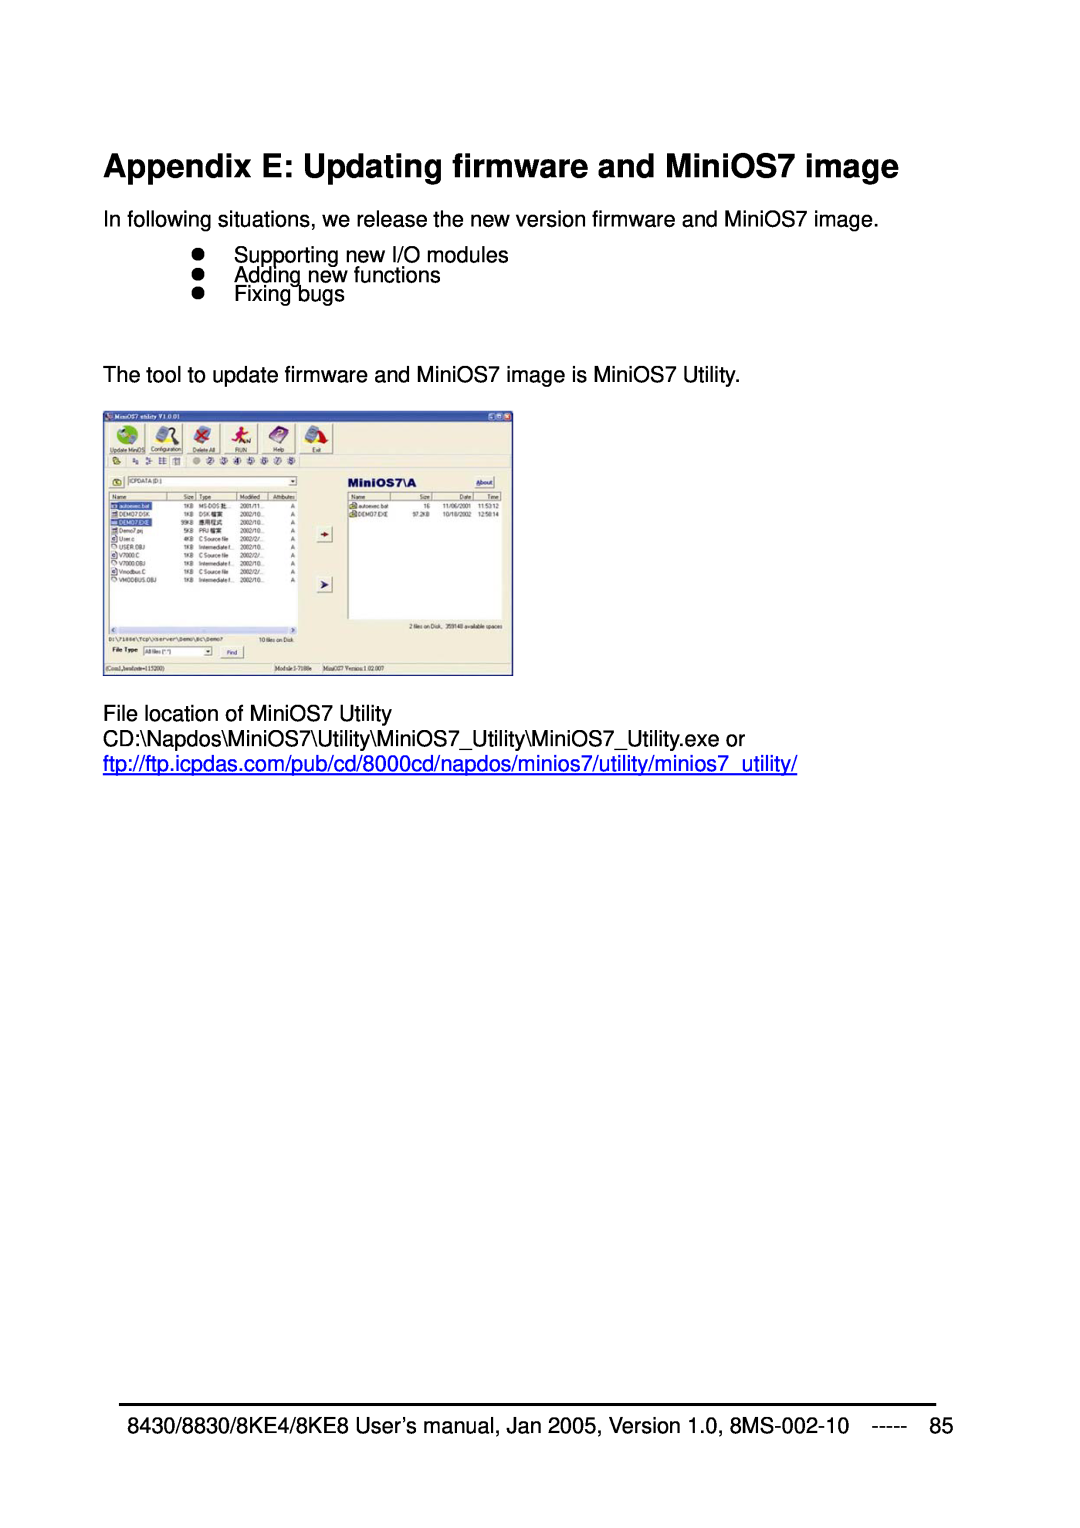 ICP DAS USA 8KE4, 8KE8, 8430, 8830 user manual Appendix E Updating firmware and MiniOS7 image 